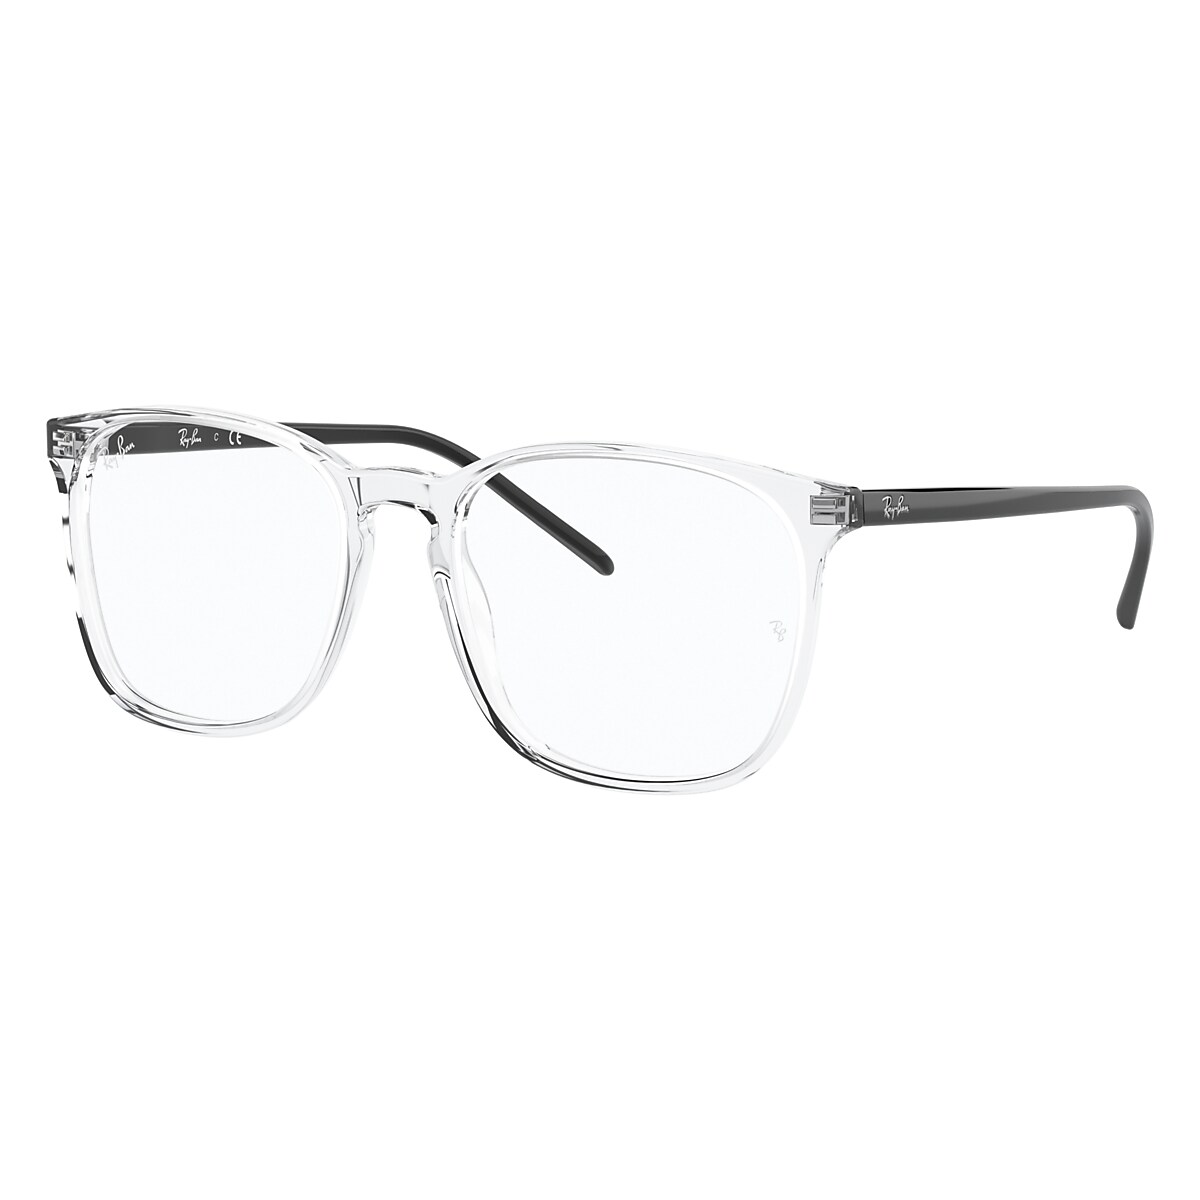 RB5387 OPTICS Eyeglasses with Transparent Frame - RB5387 | Ray-Ban® US